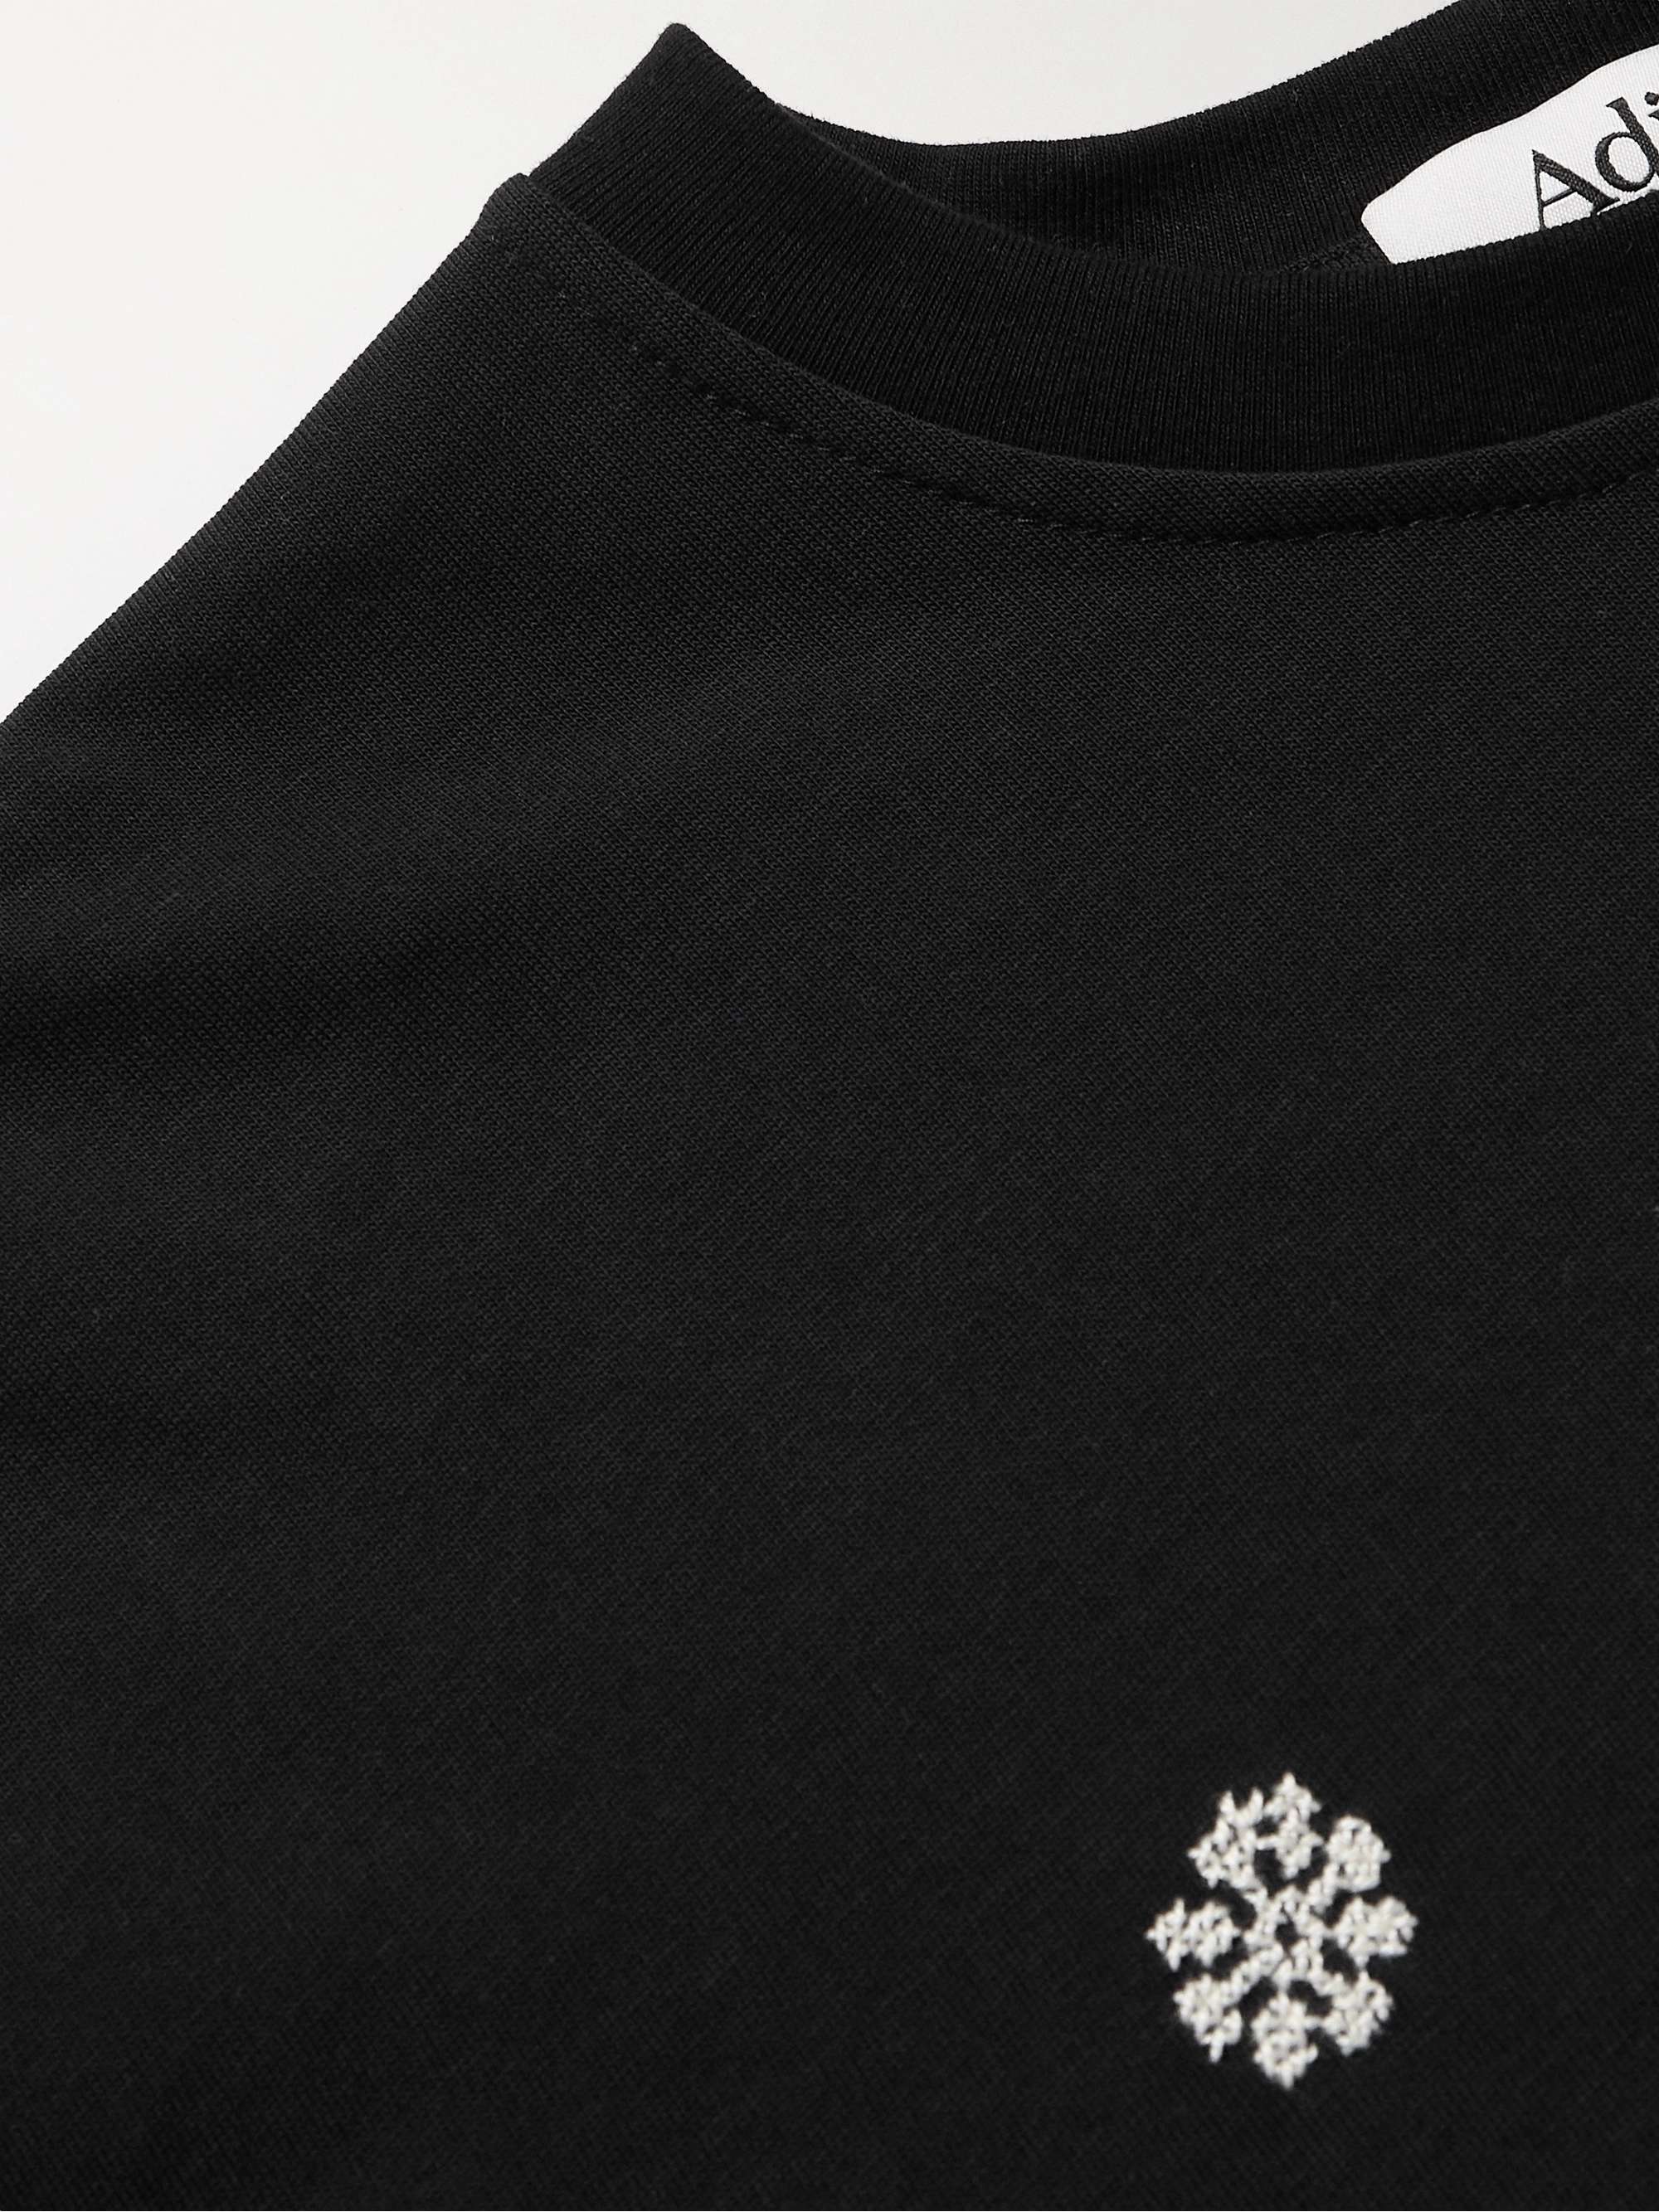 ADISH Logo-Embroidered Cotton-Jersey T-Shirt